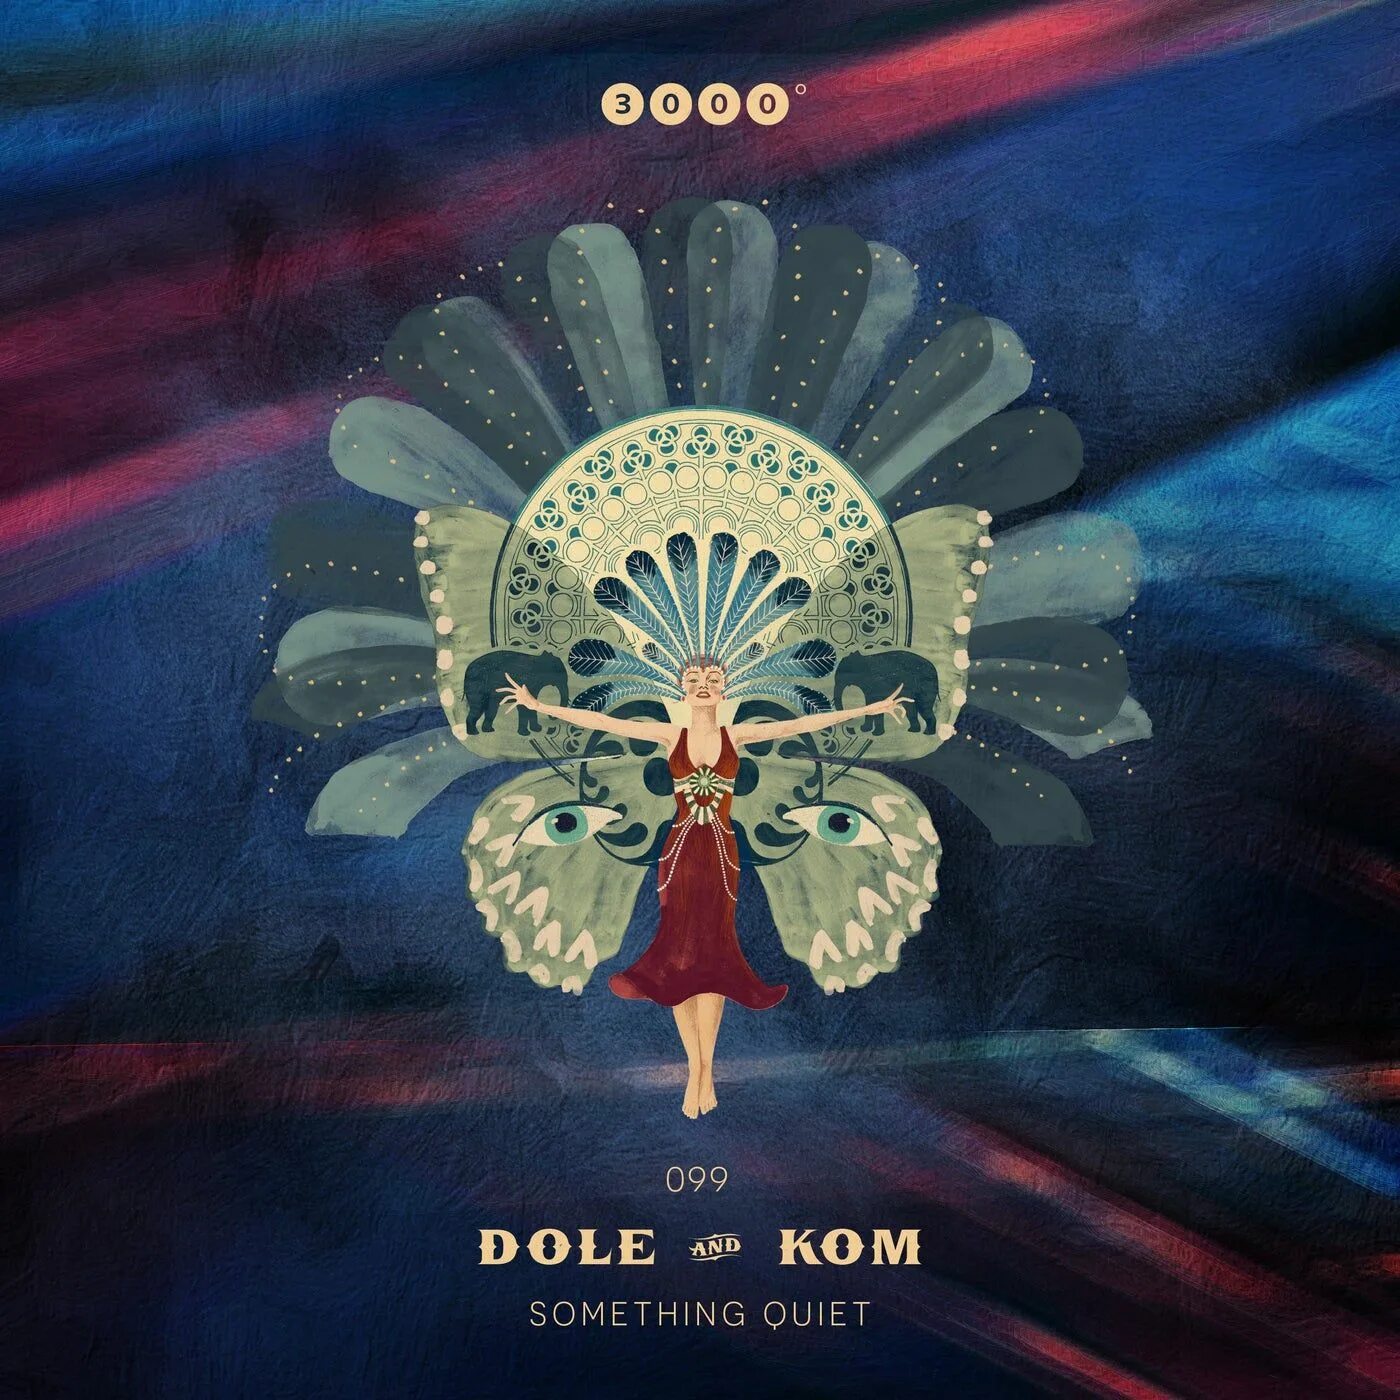 Something quiet. Dole & kom. Dole and kom - Pink Moon (Original Mix). Dole & kom - Ties (Uone Eagle Dreams Remix).